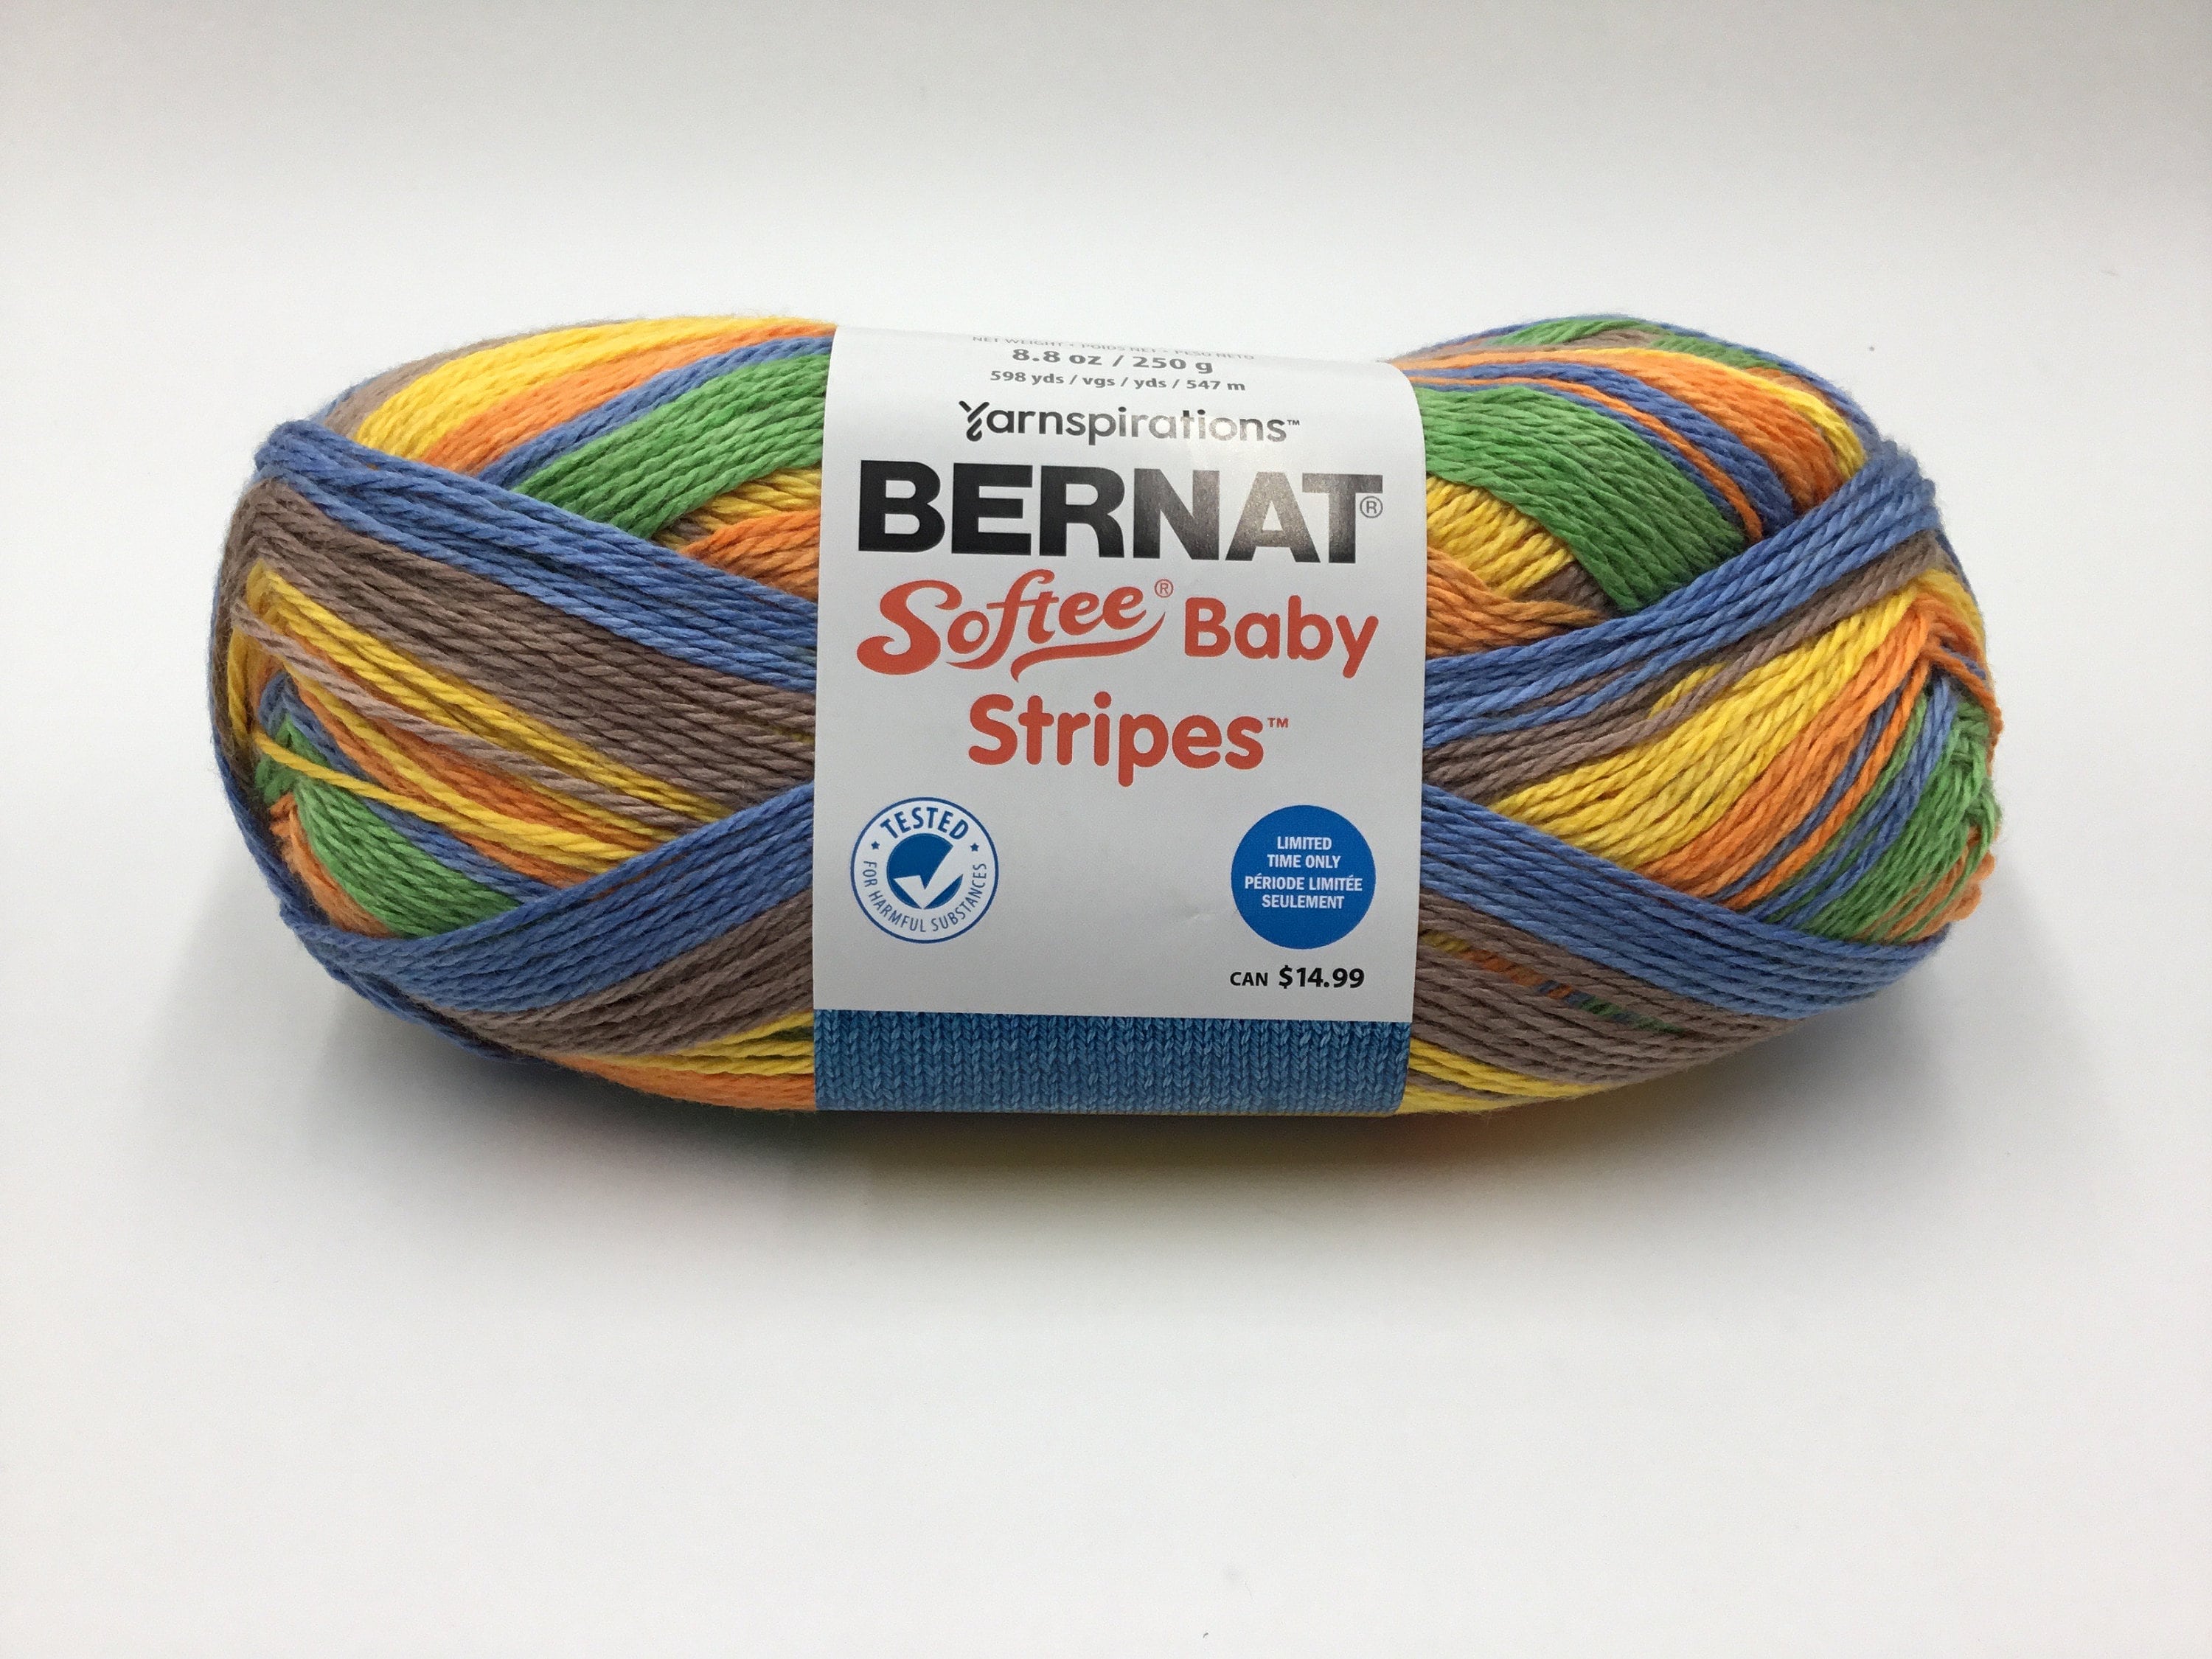 Bernat Bundle up Yarn, Small 4.9oz Size/267 Yds, 4 Worsted Weight